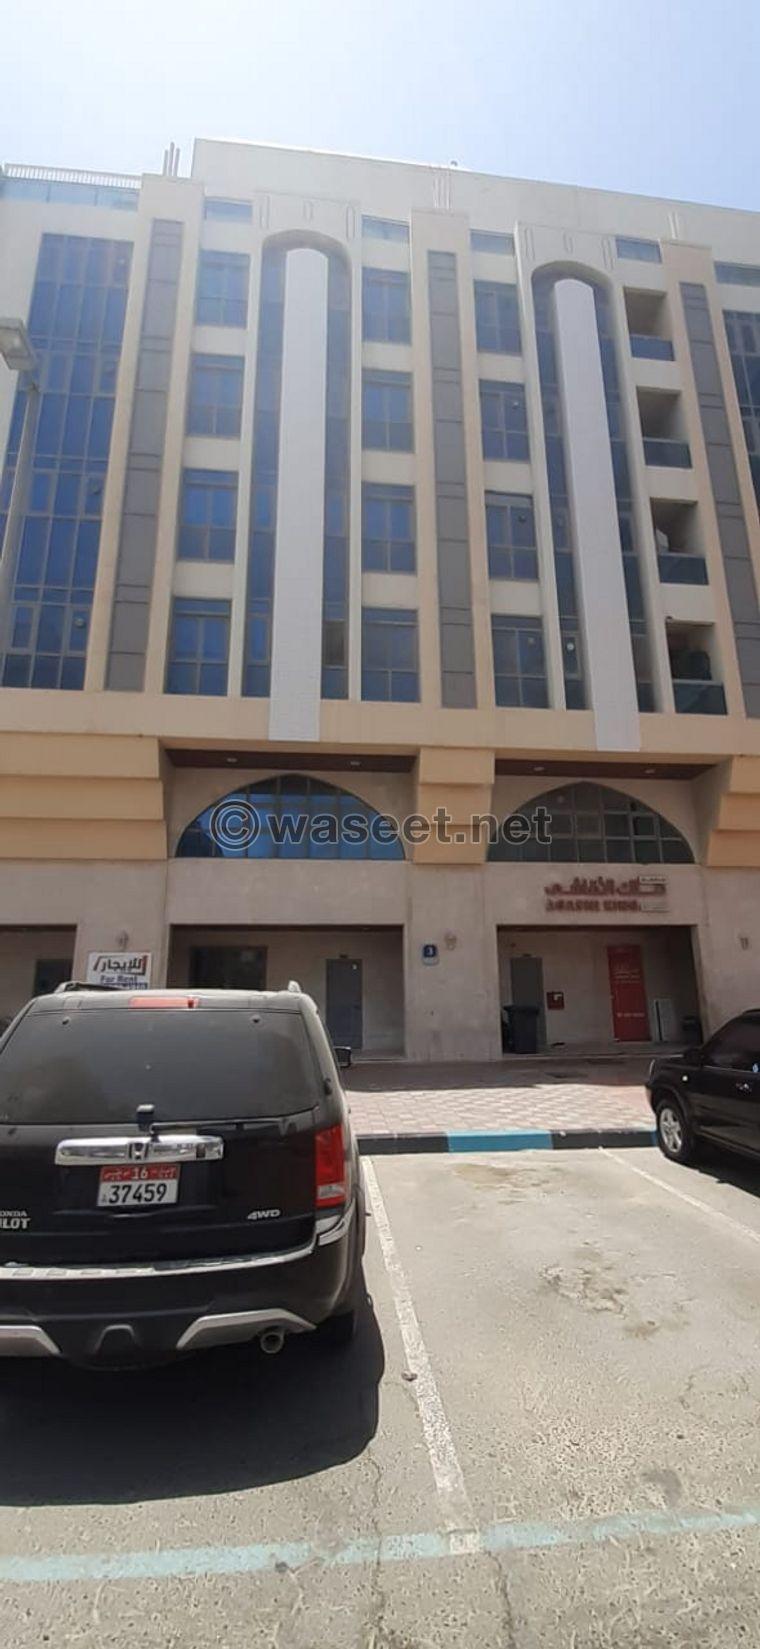 For sale residential commercial building Abu Dhabi Al Muroor Street 1